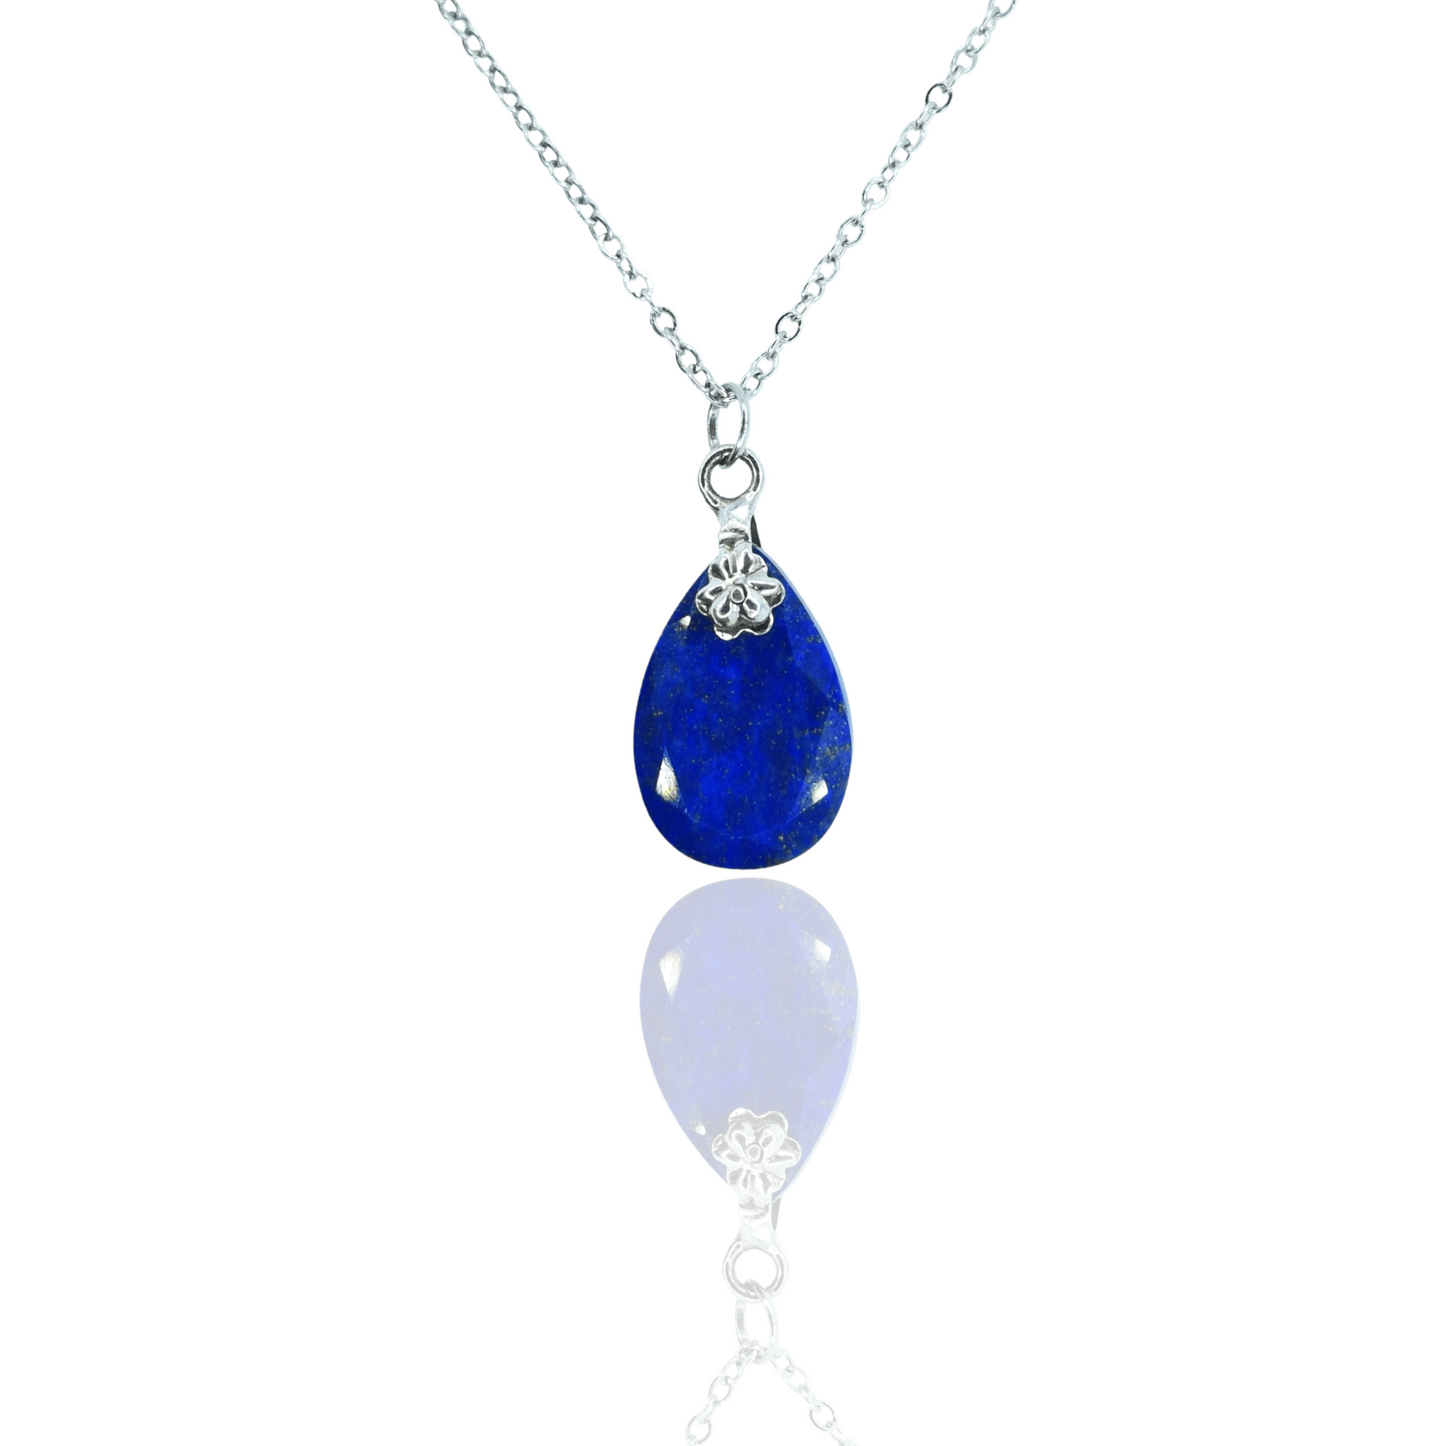 Pear-Shaped Lapis Lazuli and Floret Necklace